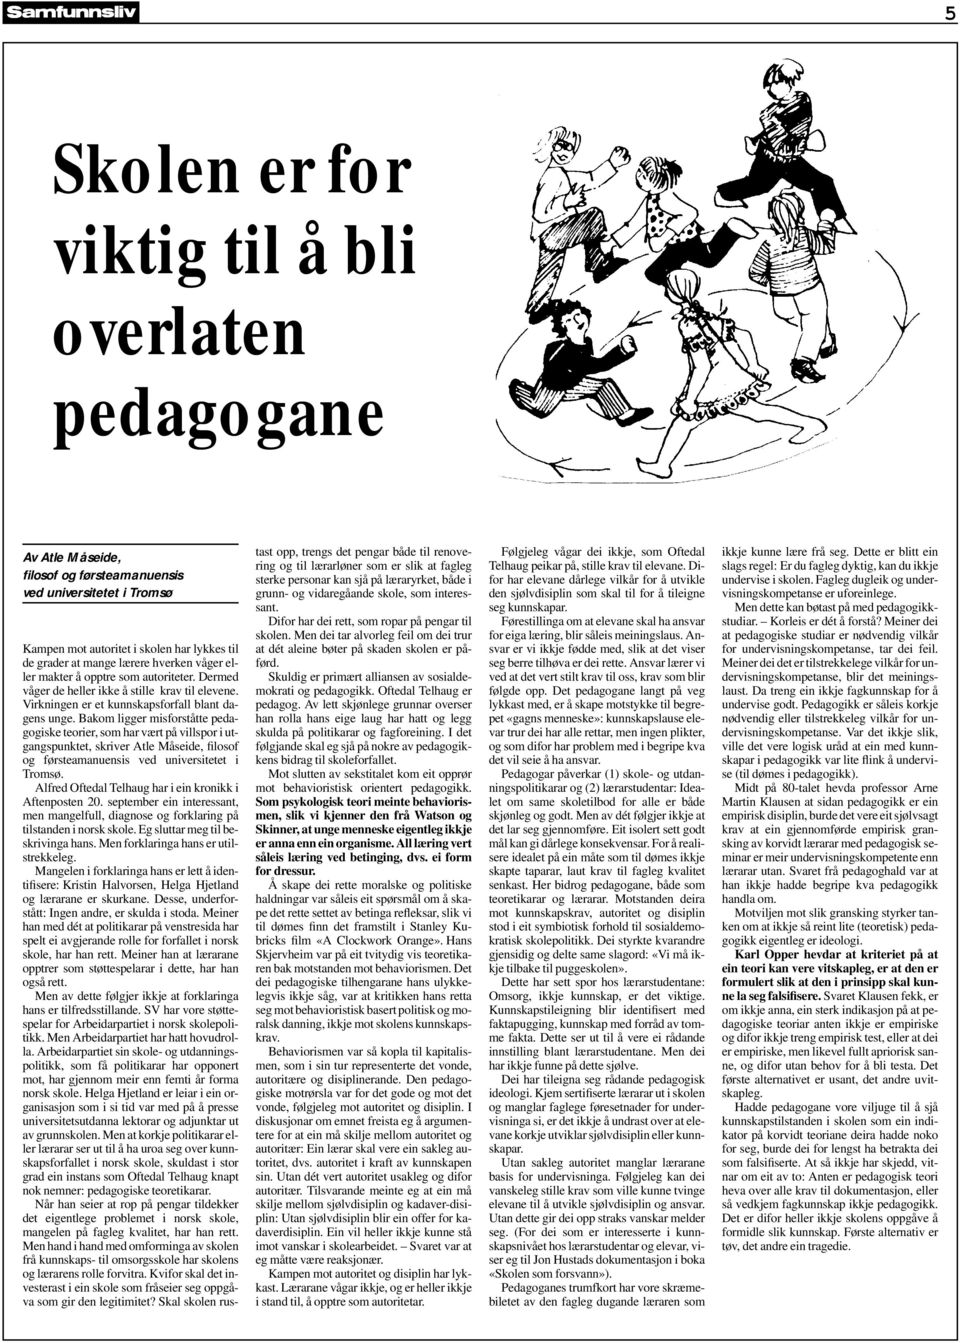 Bakom ligger misforståtte pedagogiske teorier, som har vært på villspor i utgangspunktet, skriver Atle Måseide, filosof og førsteamanuensis ved universitetet i Tromsø.